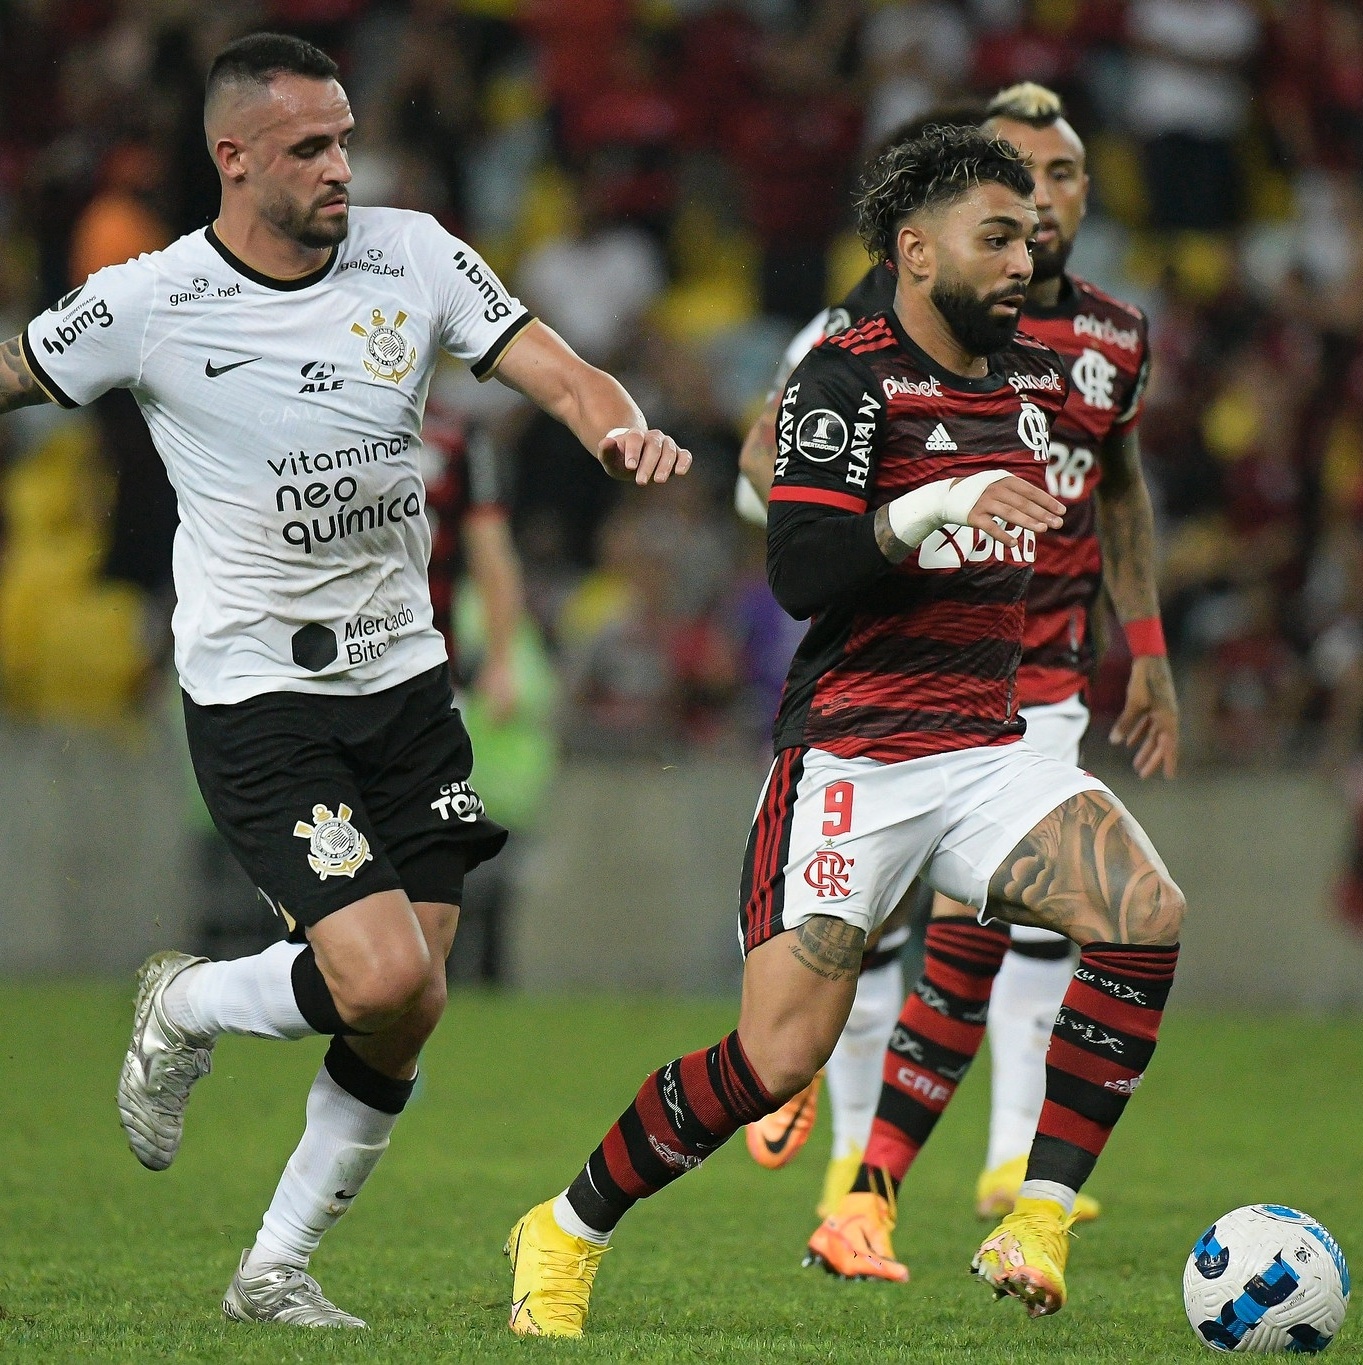 Supercopa de futebol feminino terá Corinthians x Palmeiras no primeiro  mata-mata; veja os jogos